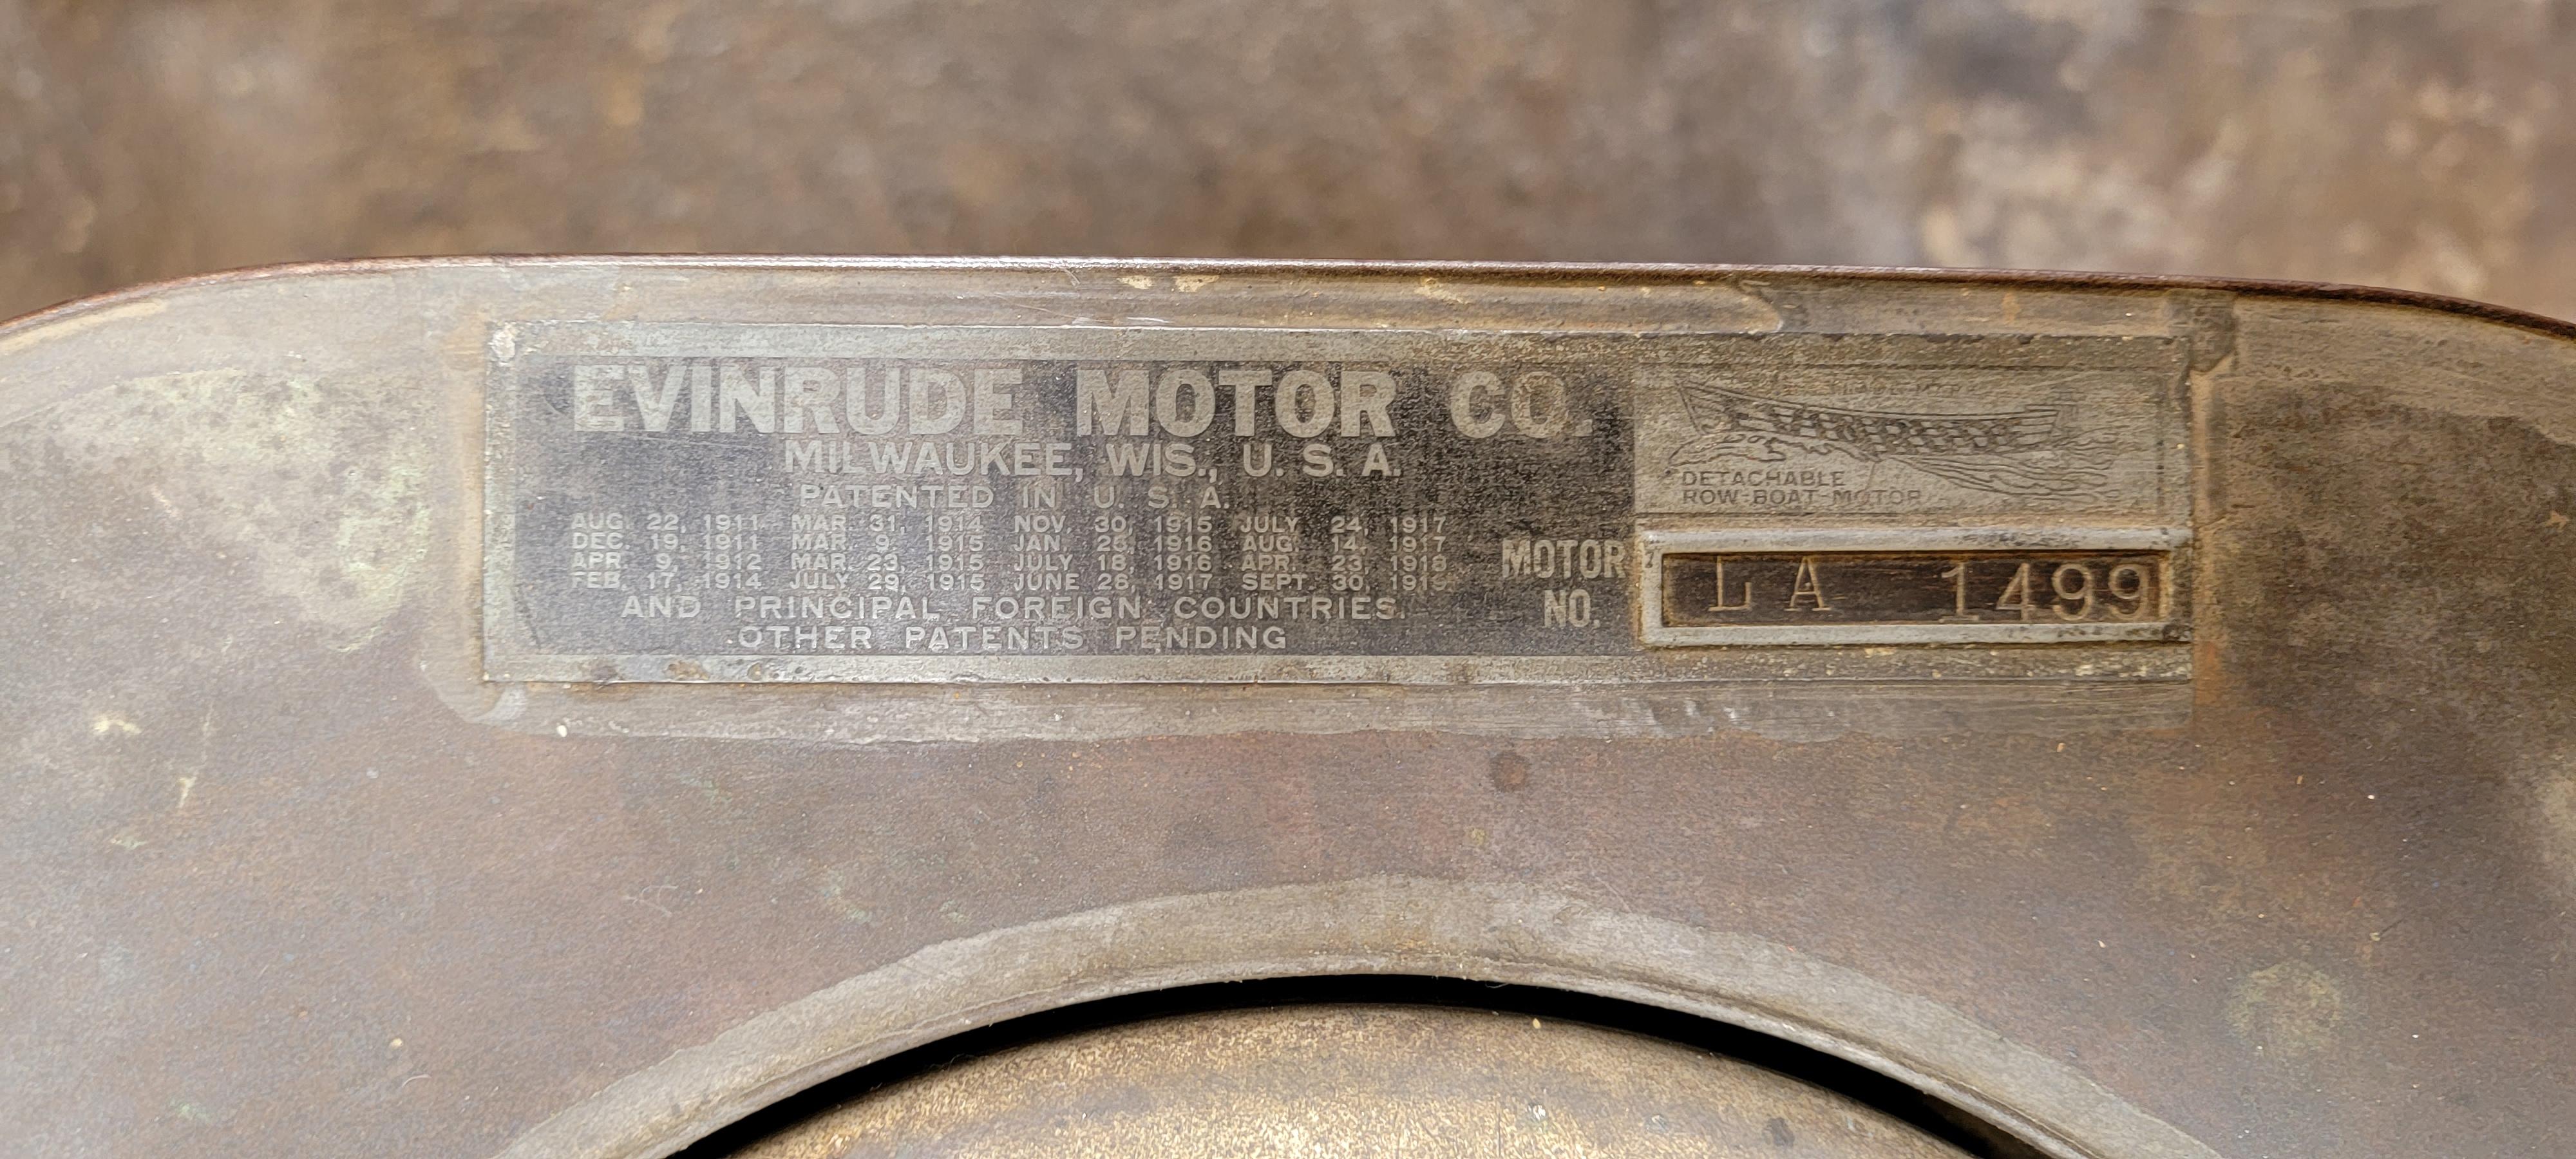 antique evinrude outboard motors